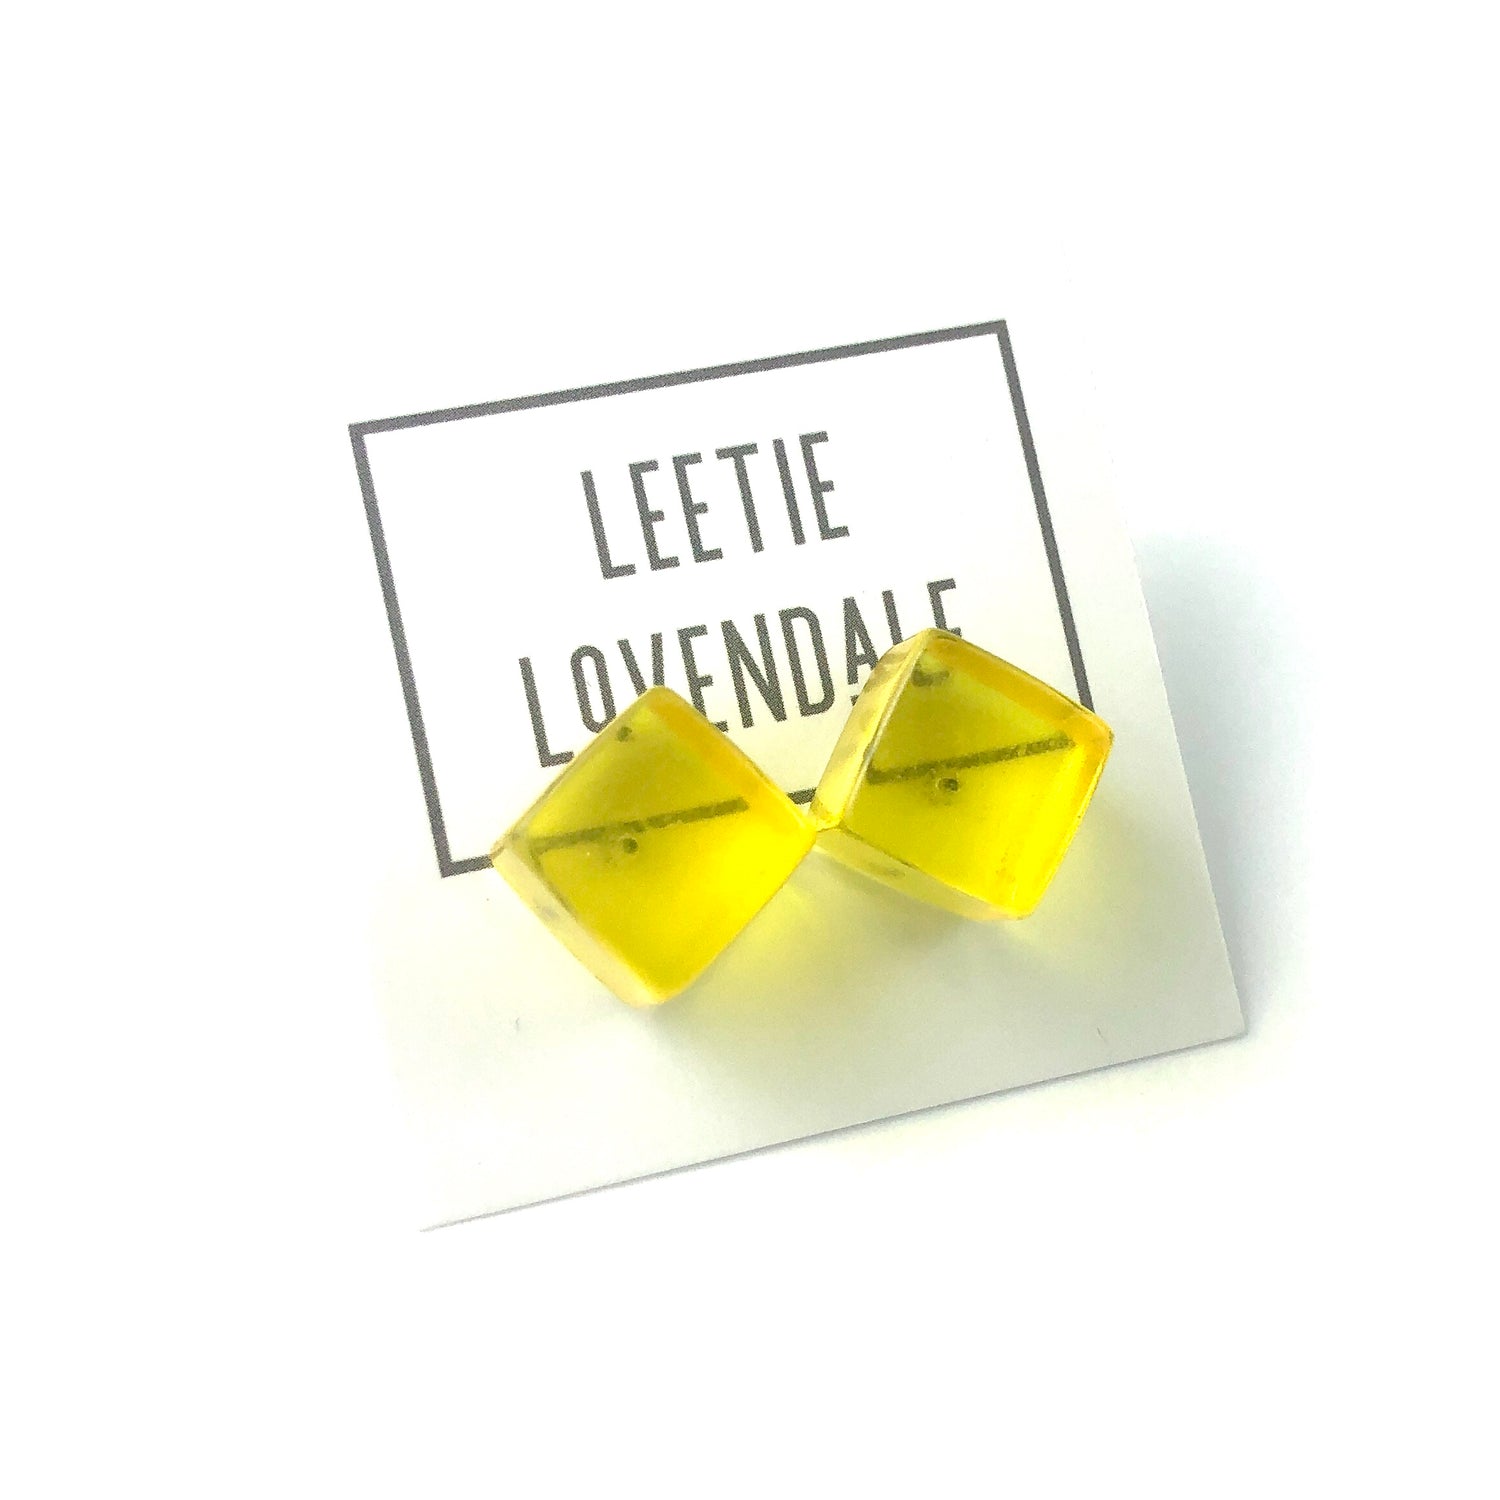 Sunshine Yellow Transparent Jumbo Cube Stud Earrings